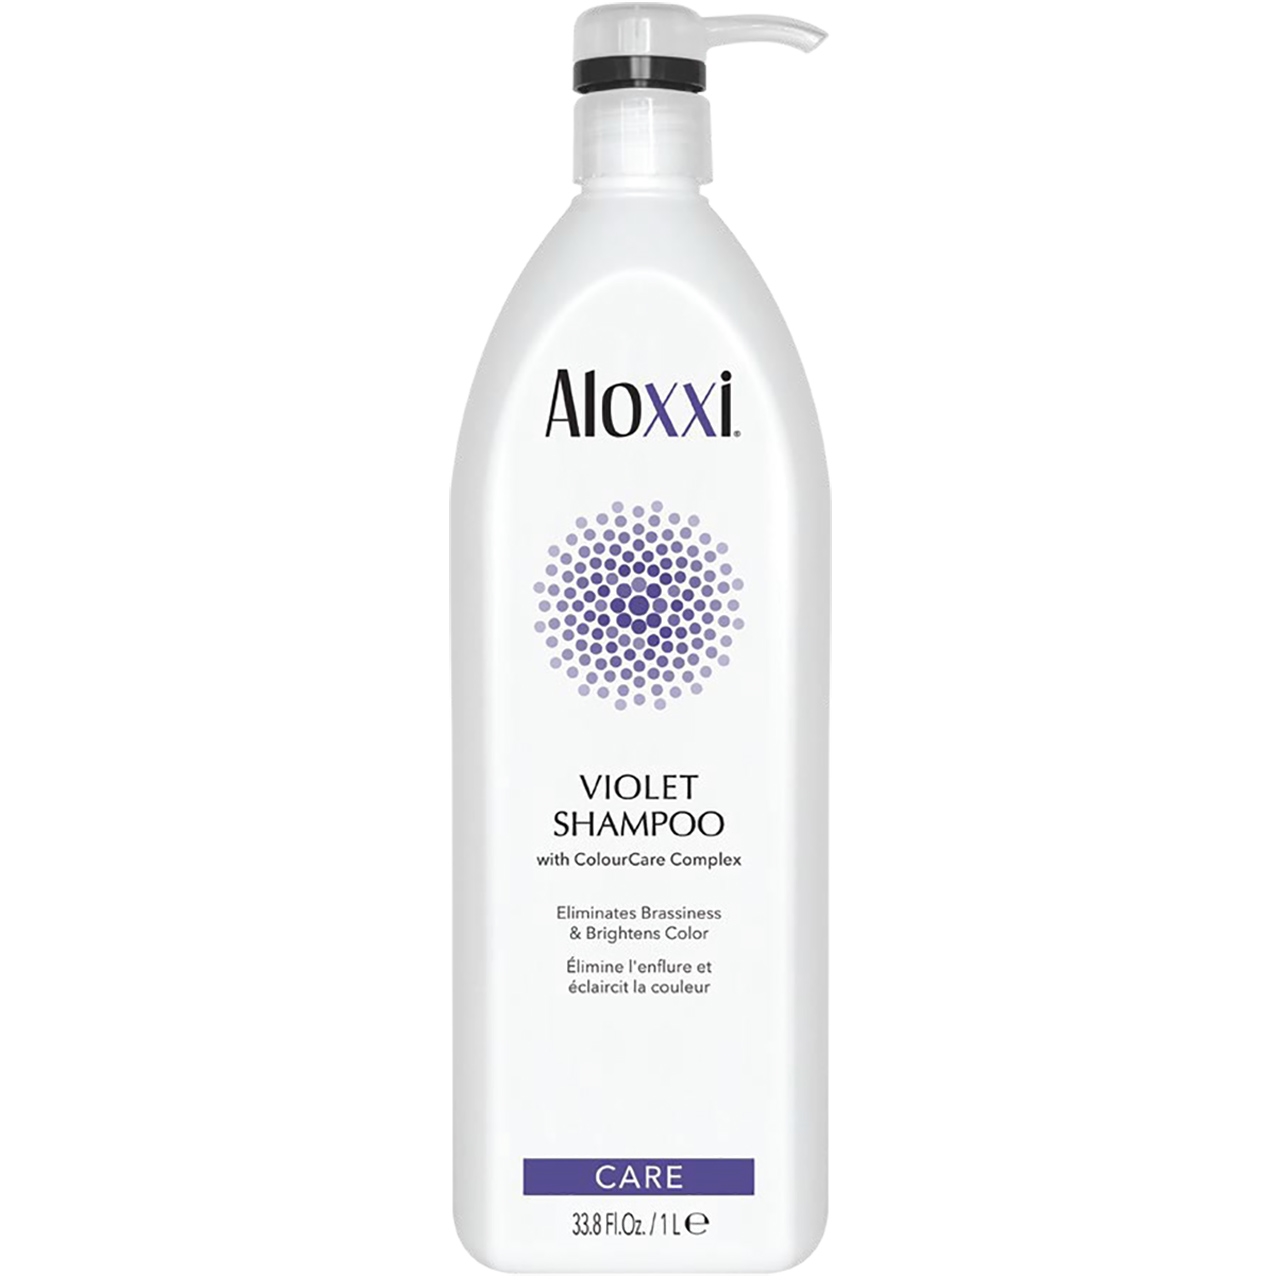 Aloxxi Violet Shampoo Liter